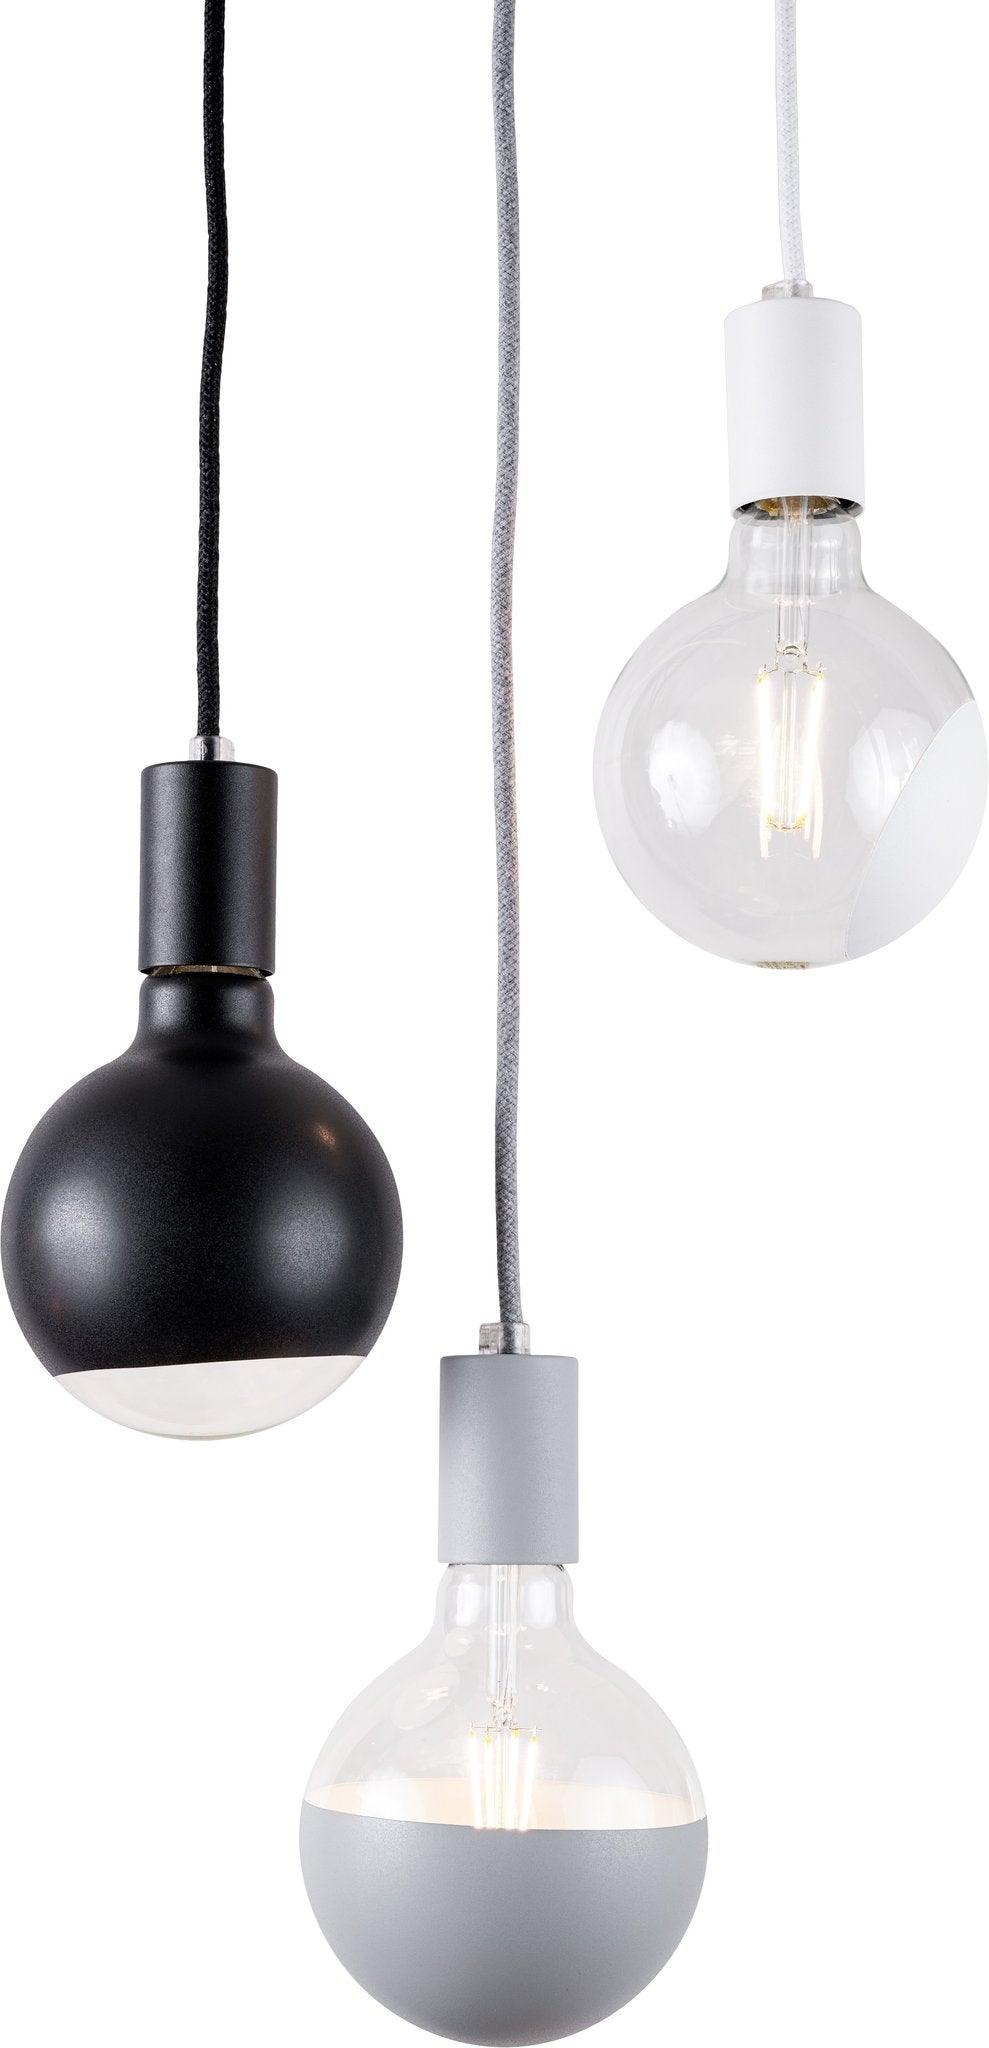 Filotto Calatina 3 Metre Cable & Lamp Holder Combo - Prisma Lighting